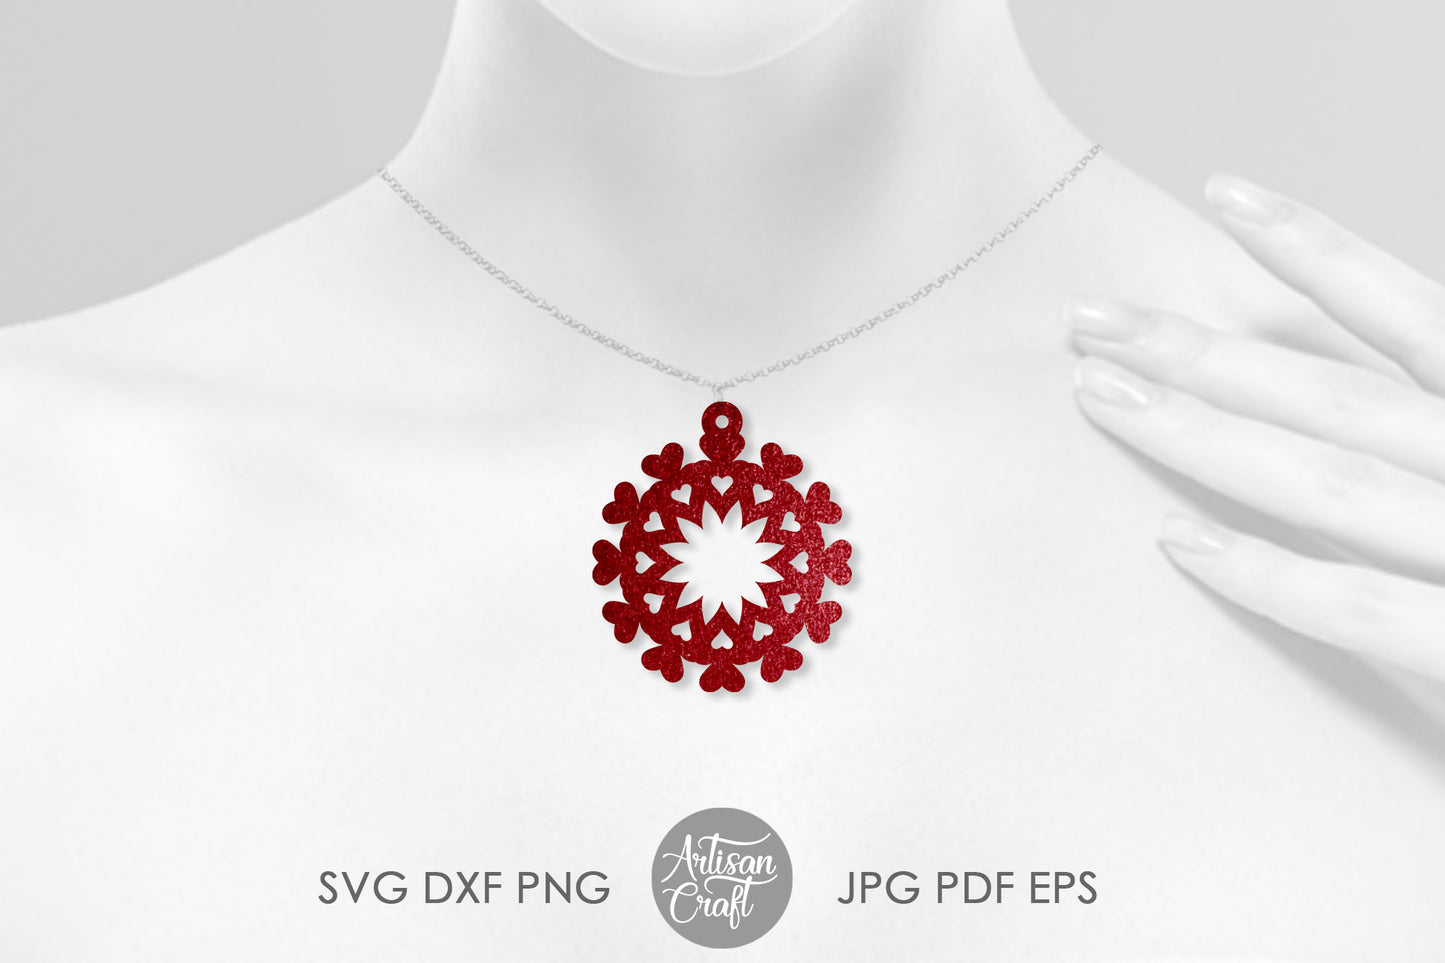 Heart earrings SVG with heart mandala art